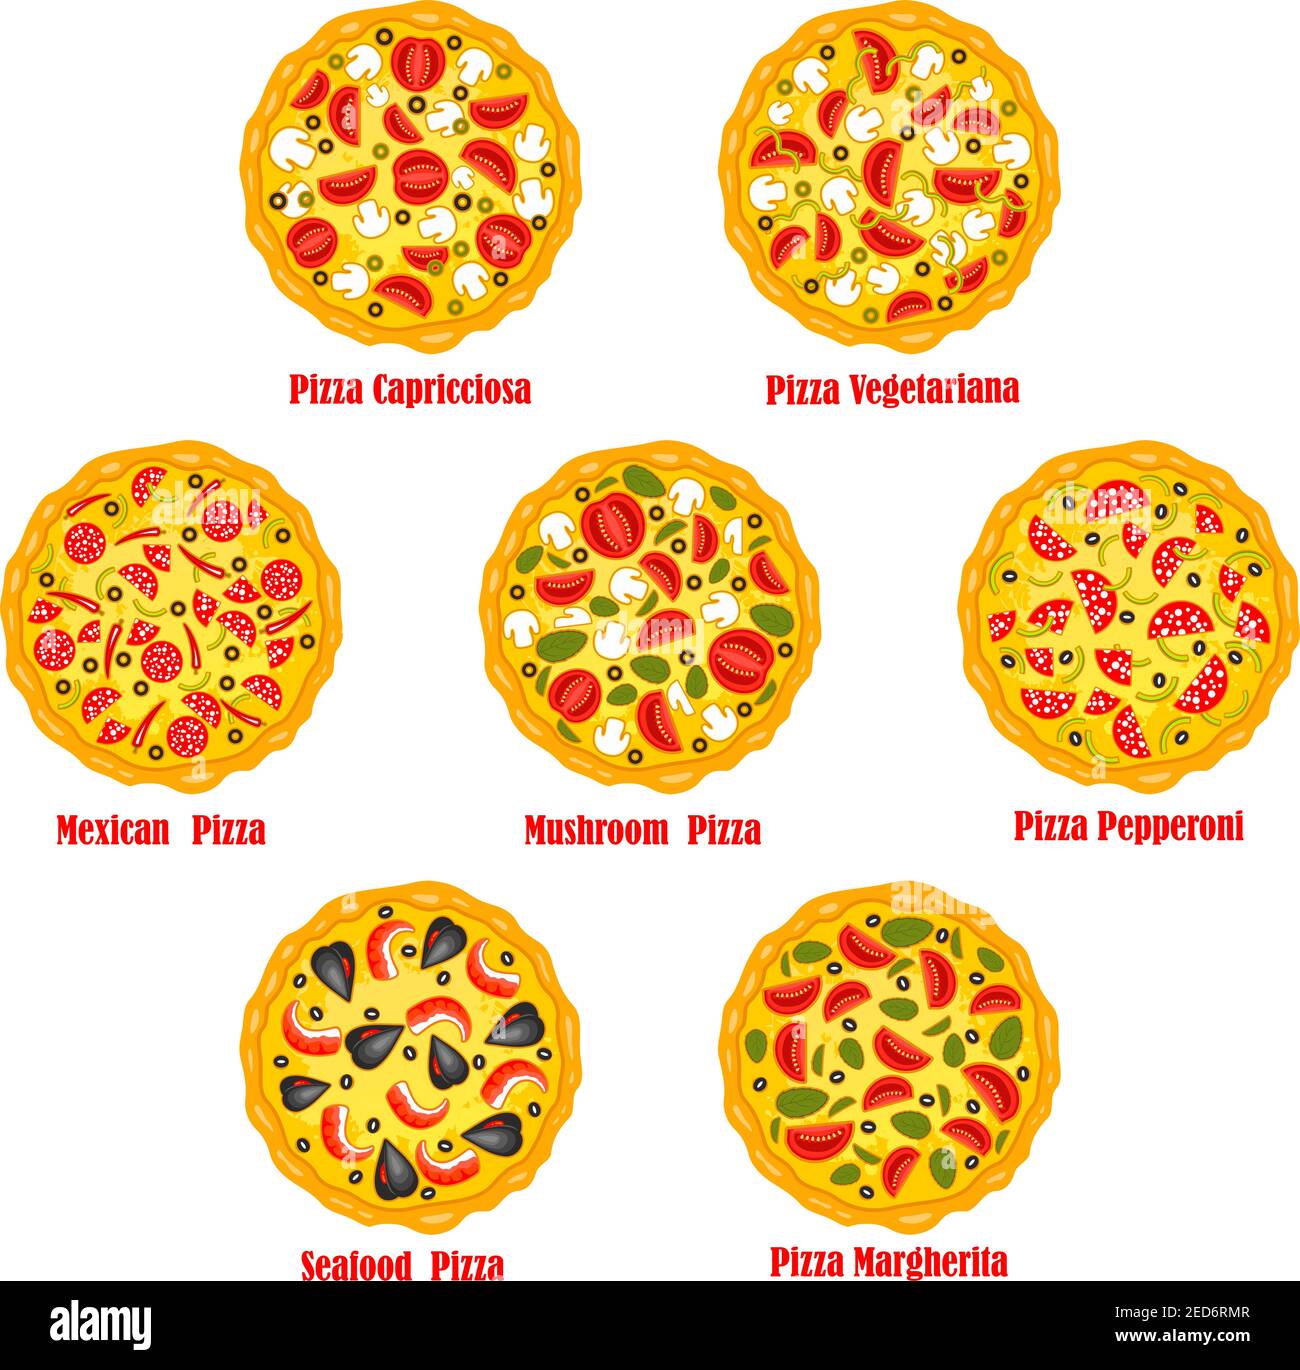 технологические карты пицца пепперони фото 29